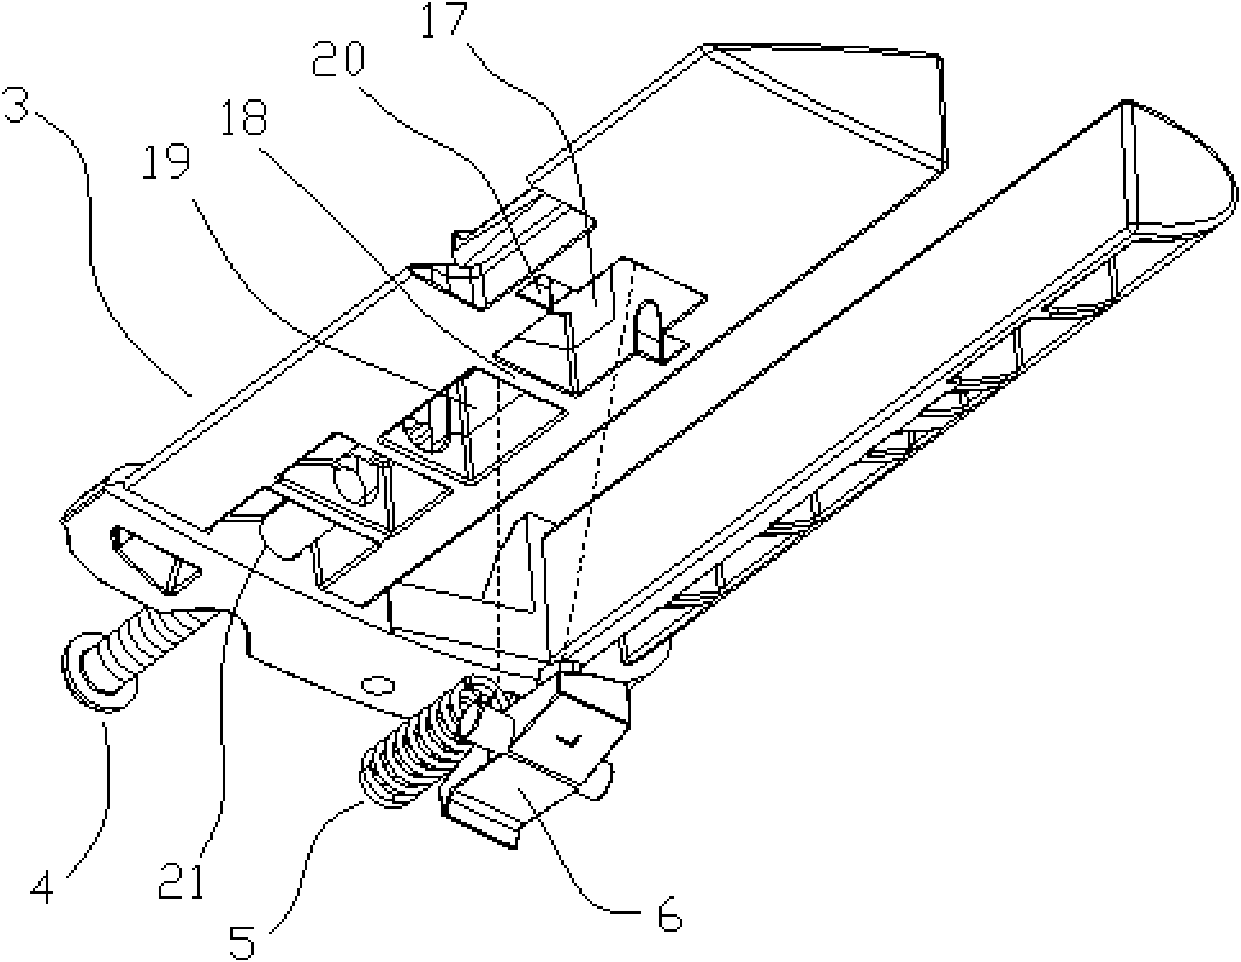 Adjusting structure of vehicle roof frame